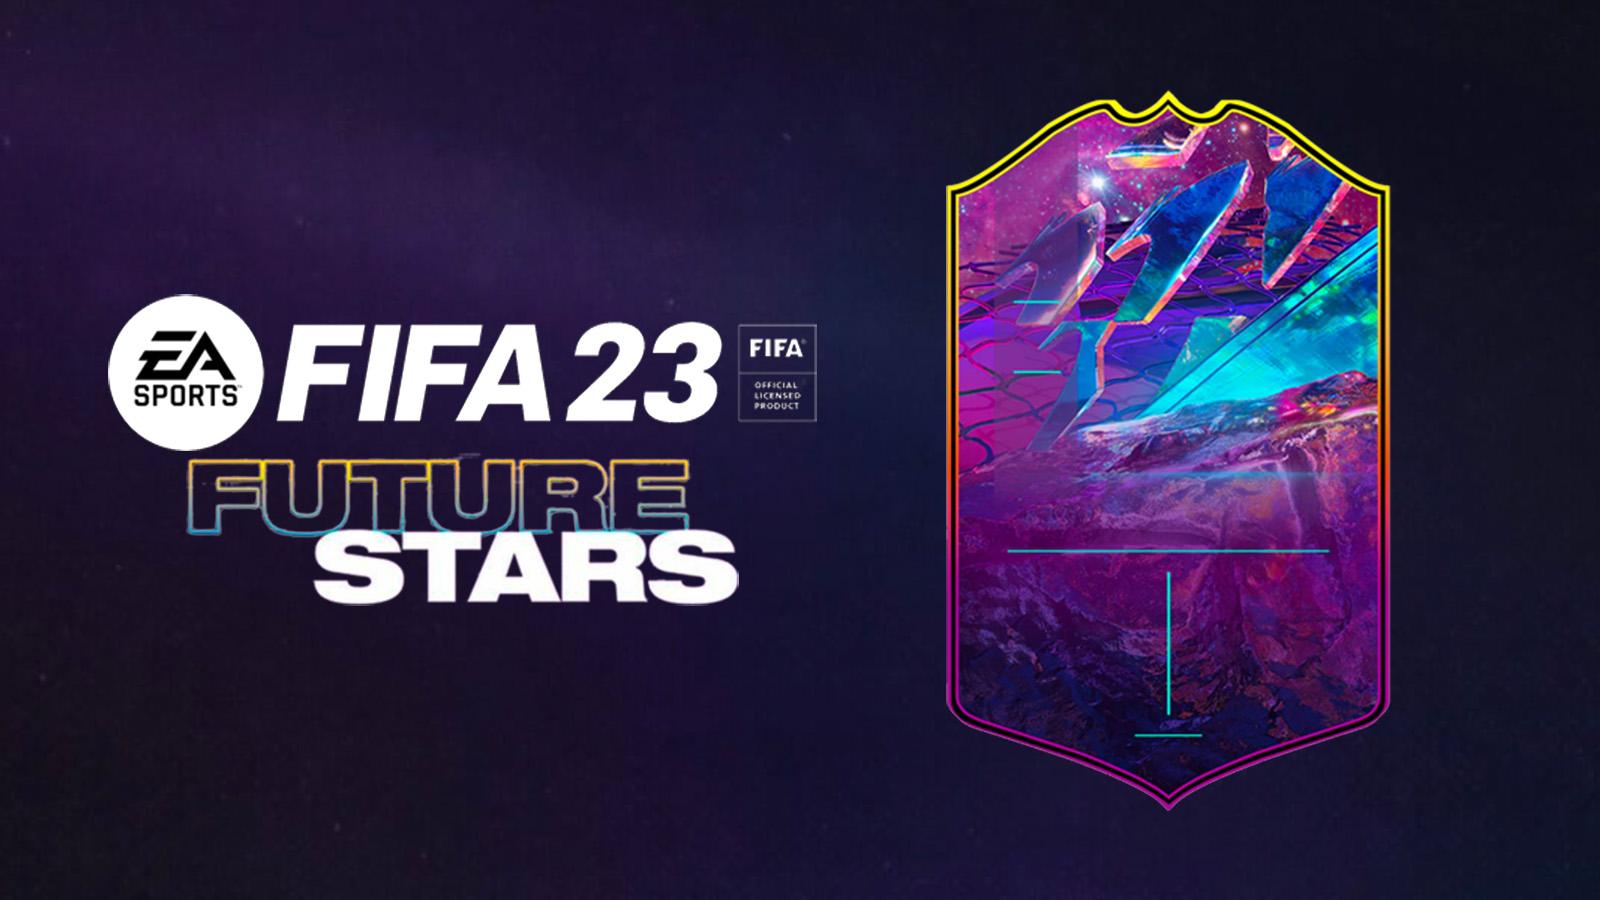 FIFA 23 Future Stars next to logo